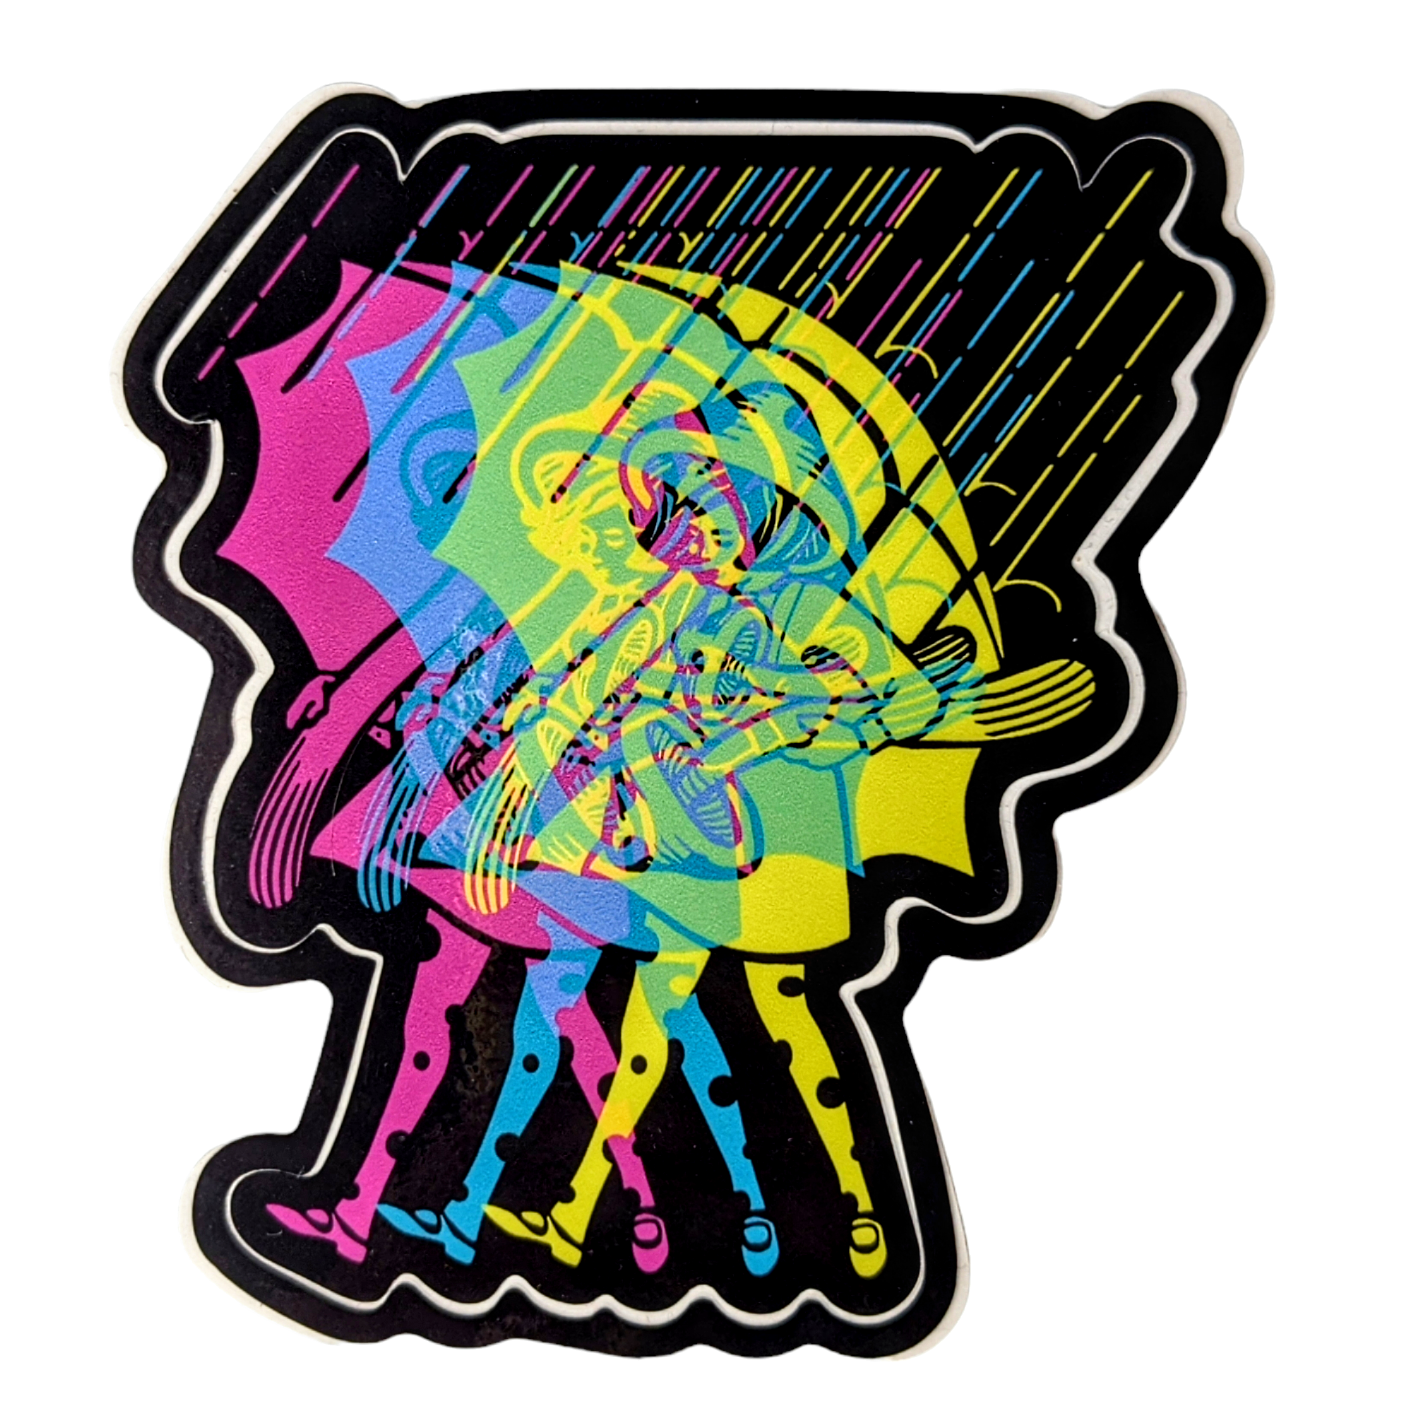 Slinger Mushroom Girl Sticker  Includes (1) 4” vinyl die cut sticker